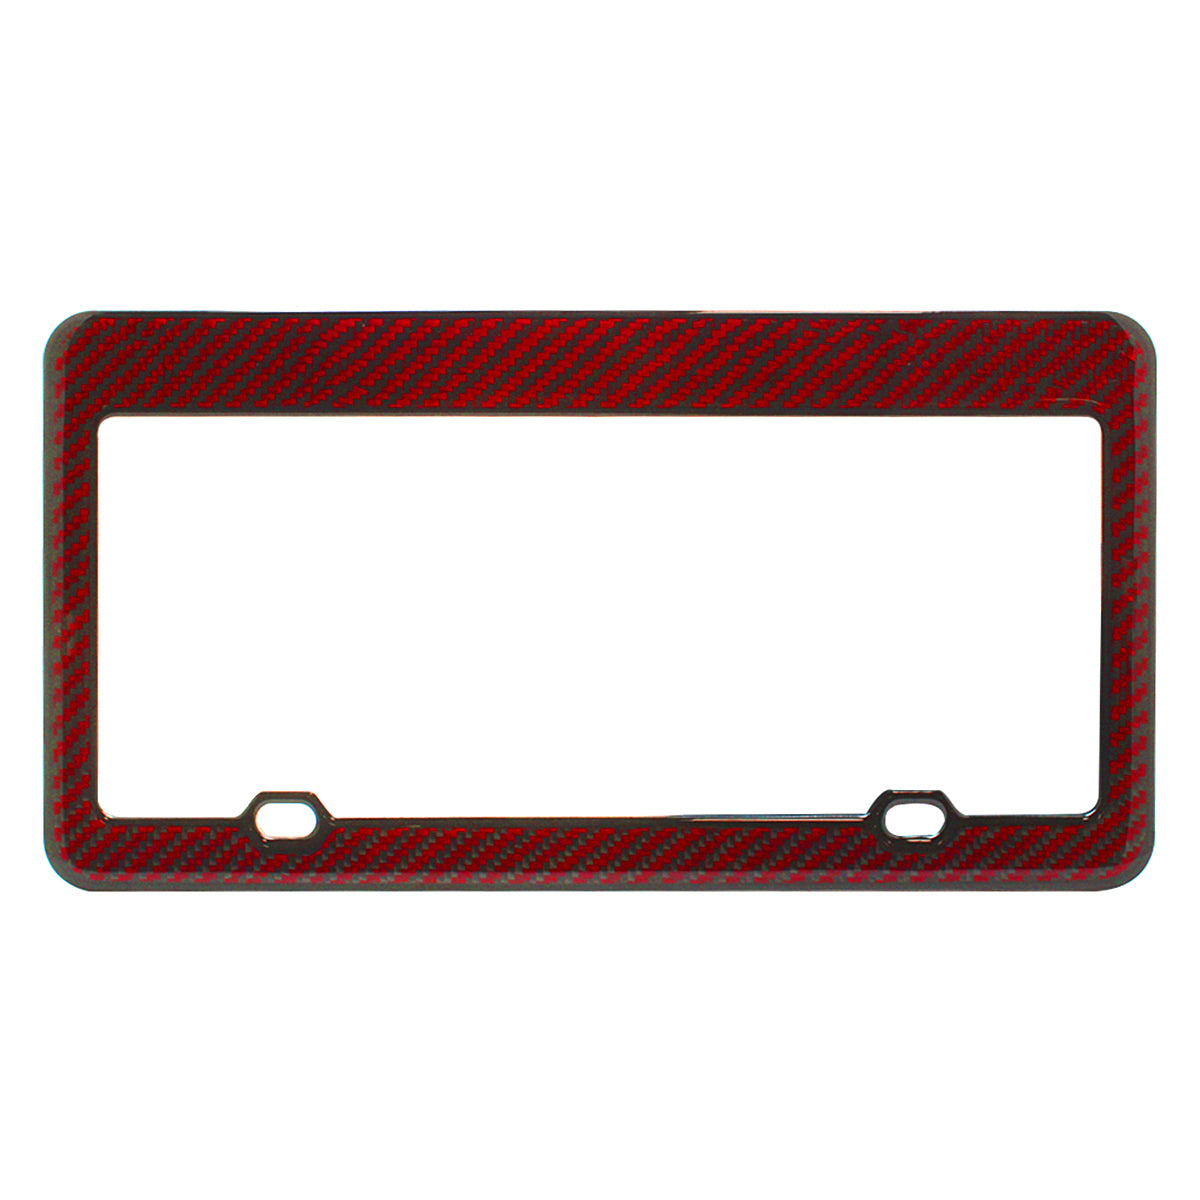 Red Carbon Fiber License Plate Frame (USDM)